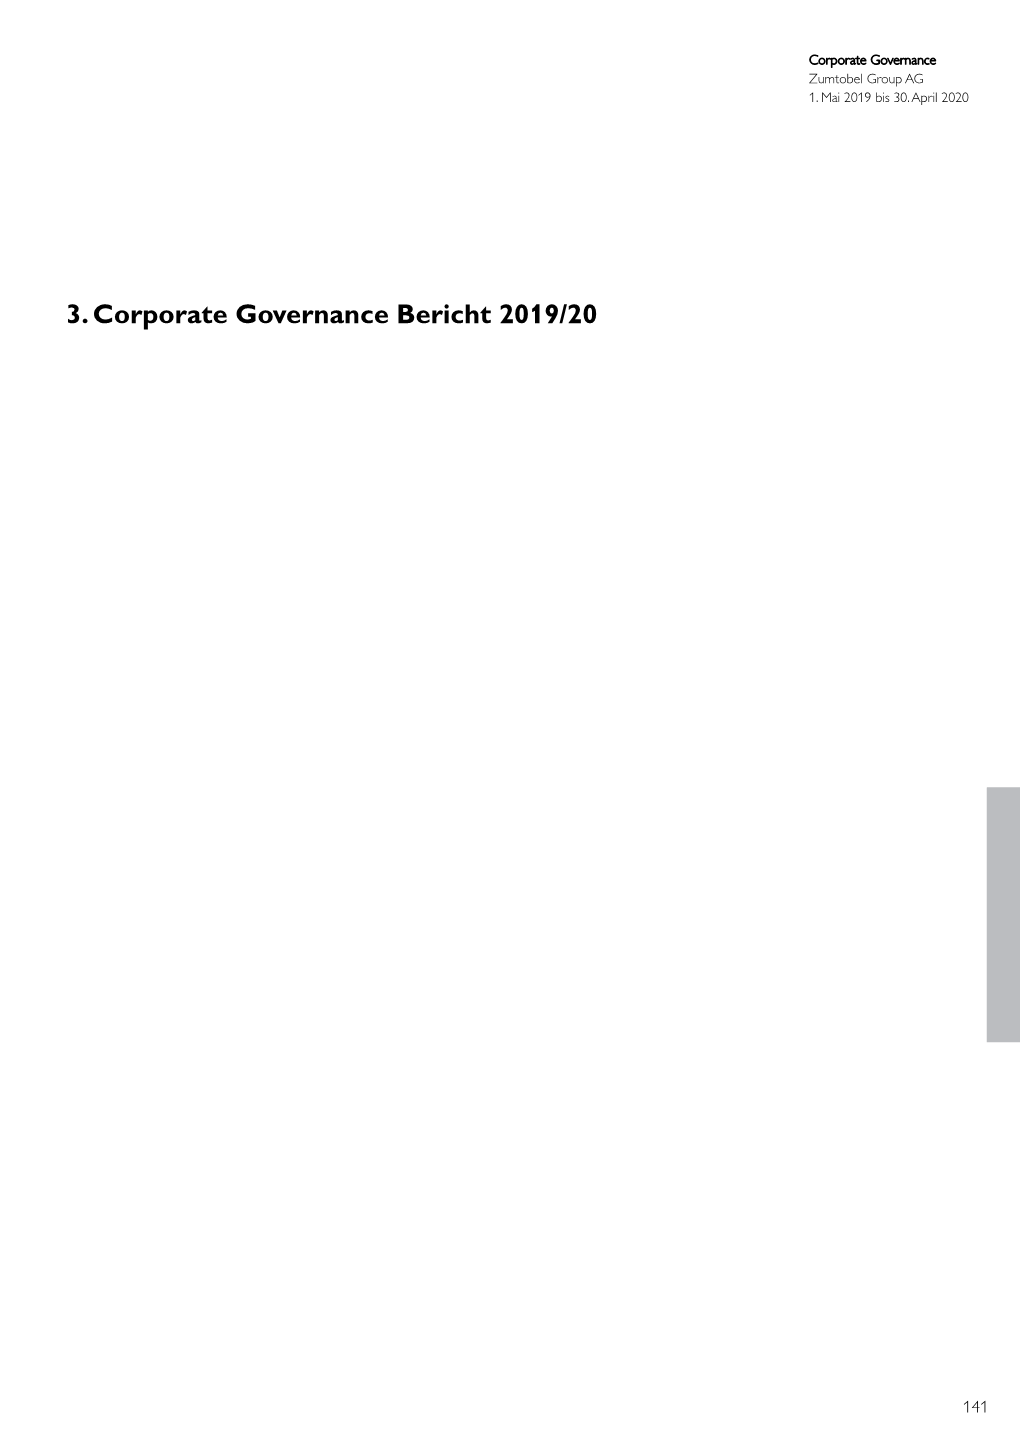 3. Corporate Governance Bericht 2019/20